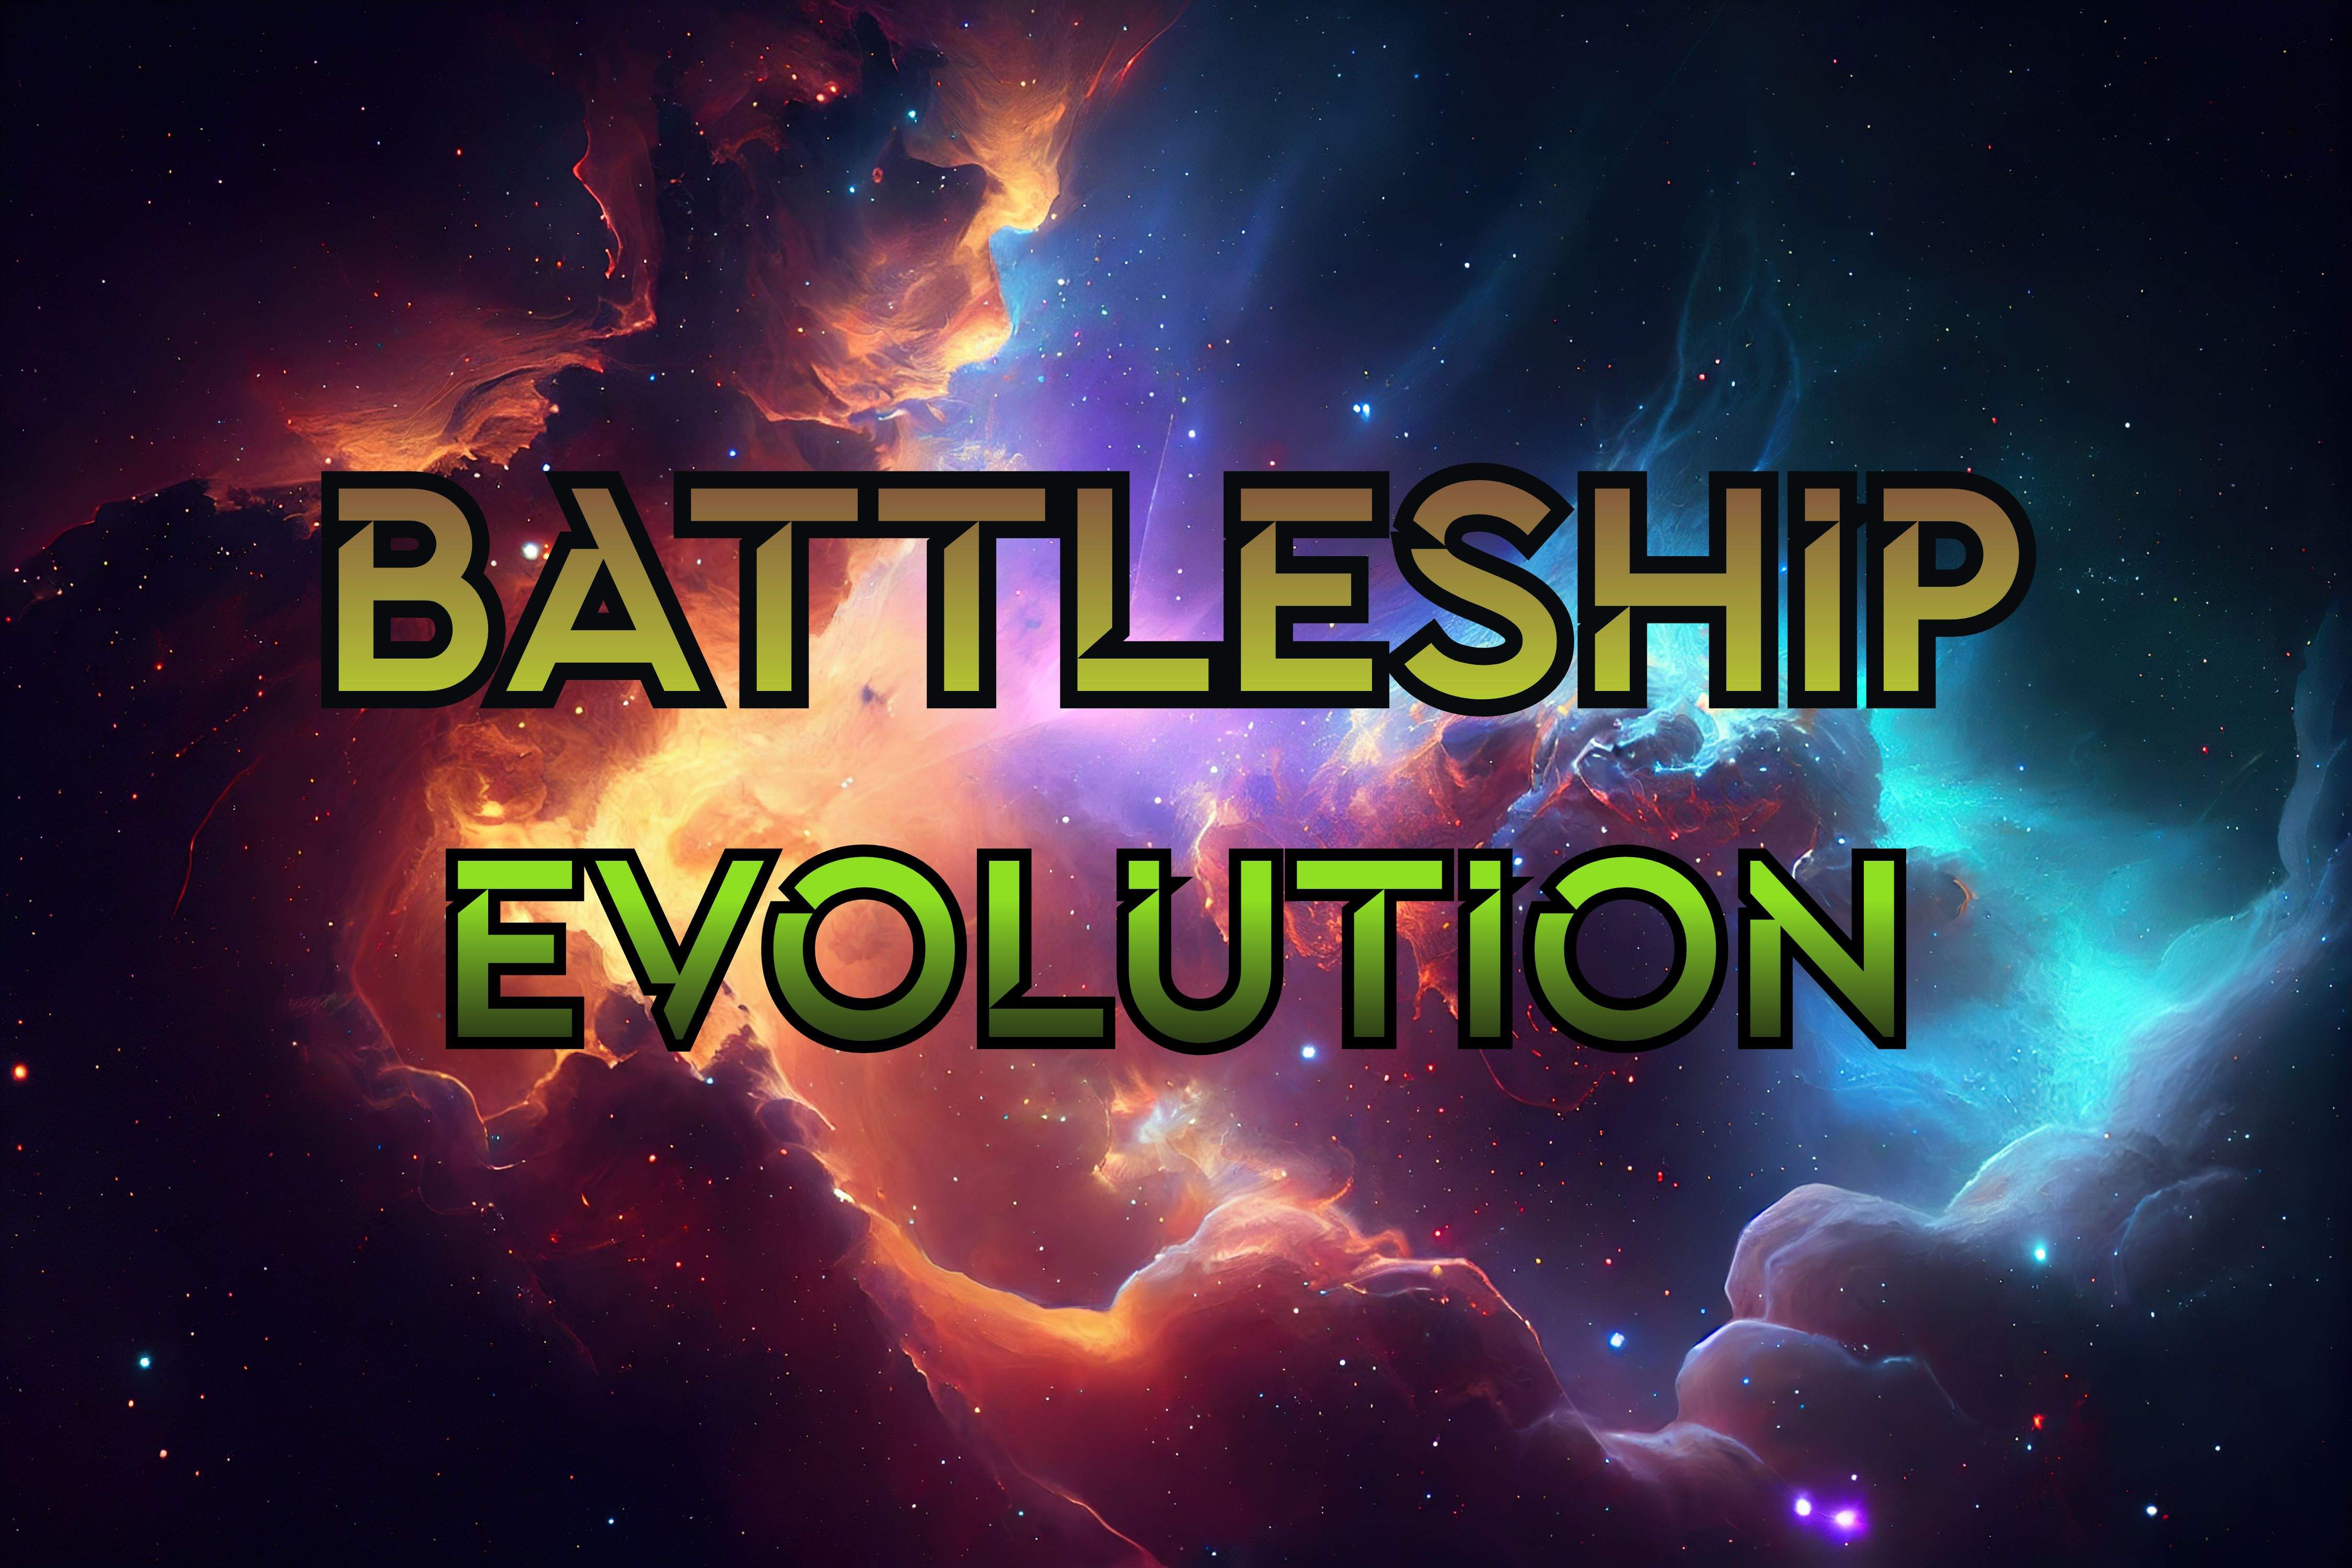 BATTLESHIP EVOLUTION